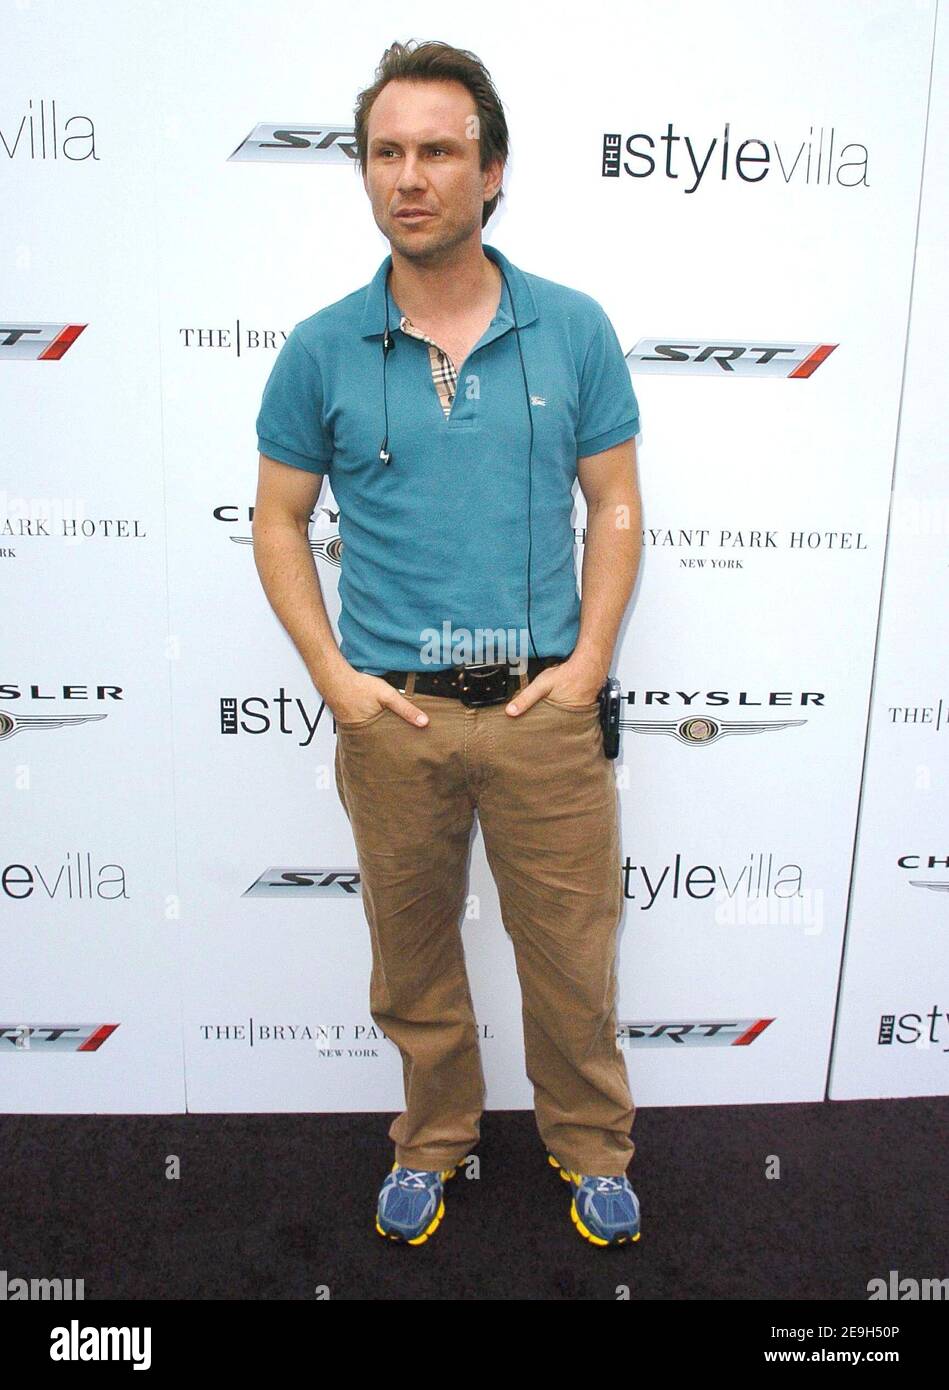 Christian Slater nimmt an der MTV VMA Awards Style Villa Gift Lounge 2006 Teil, die am 29. August 2006 im Bryant Park Hotel in New York City, NY, USA, stattfand. Foto von David Miller/ABACAPRESS.COM Stockfoto